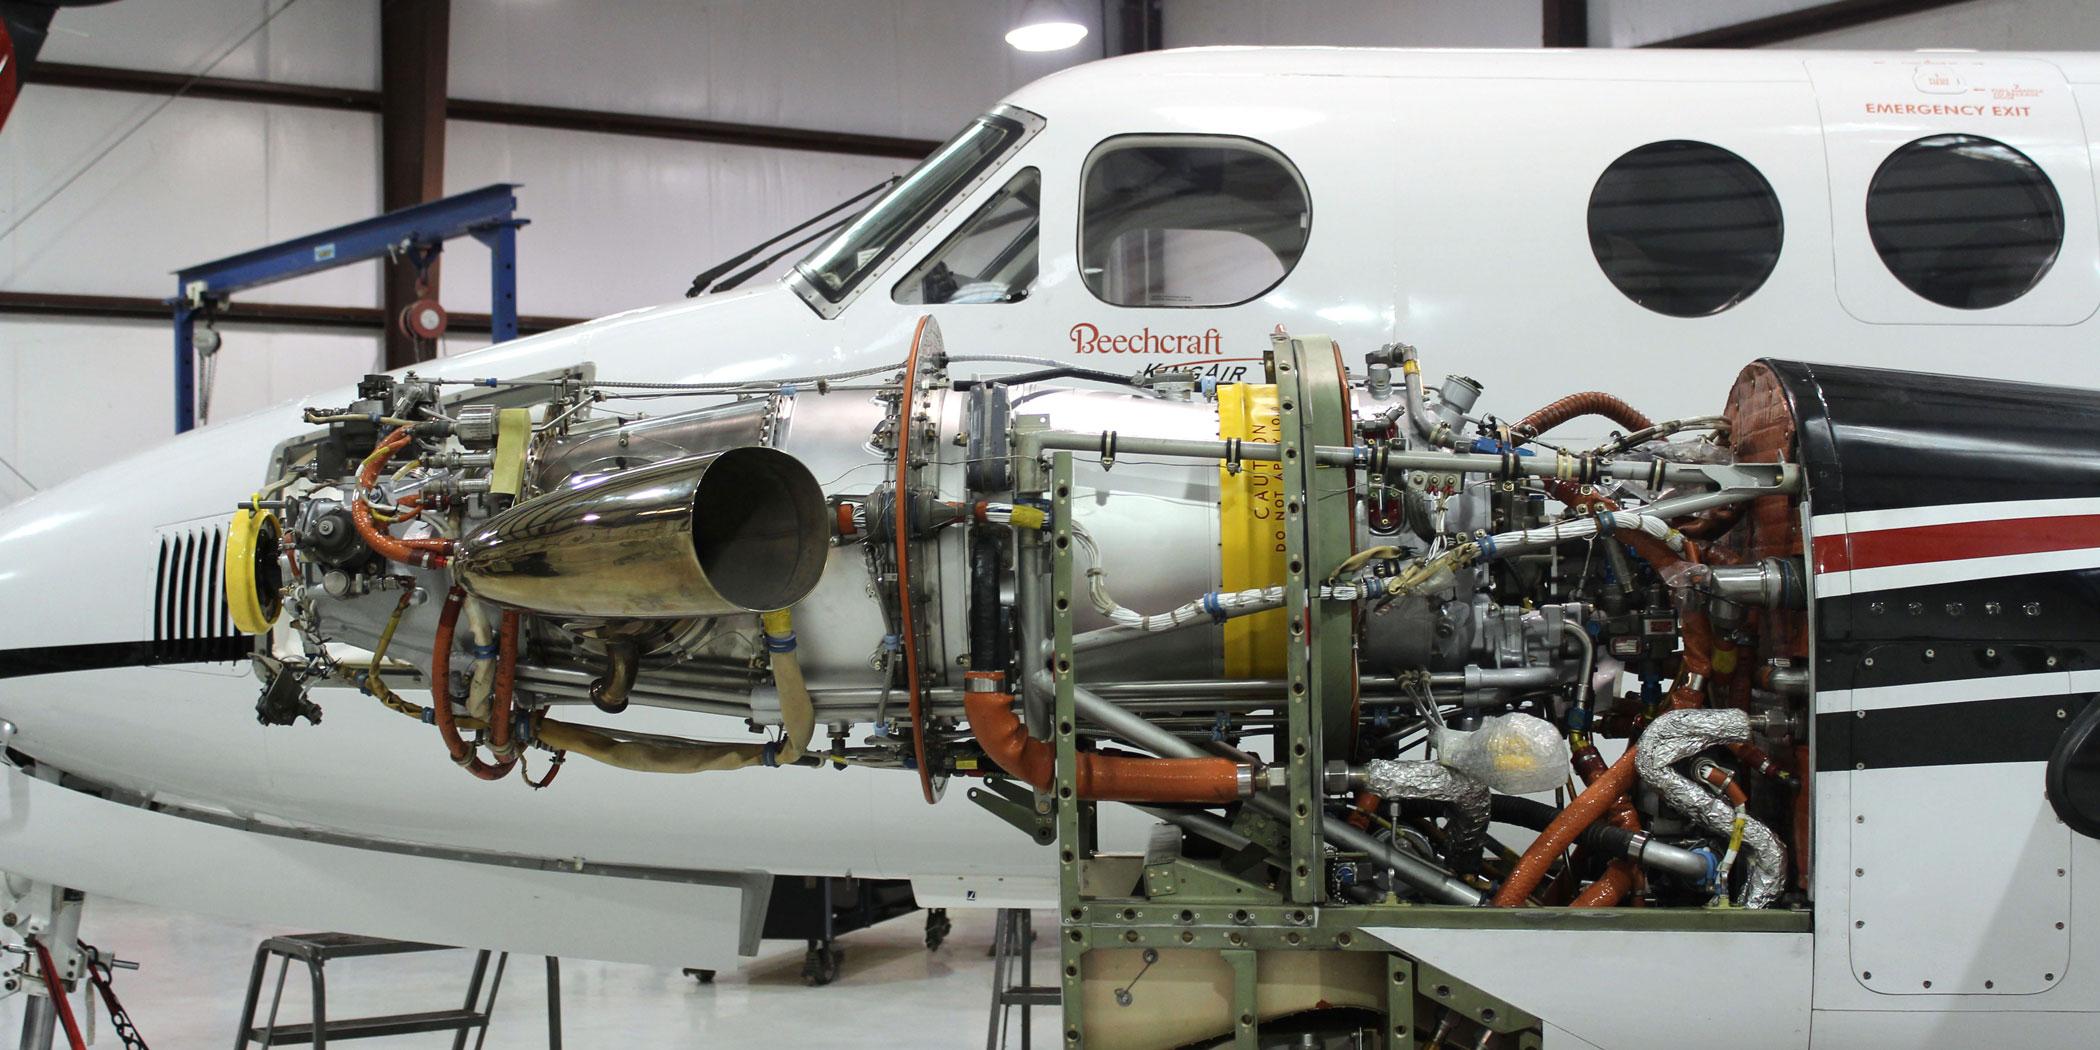 King Air 350 engine